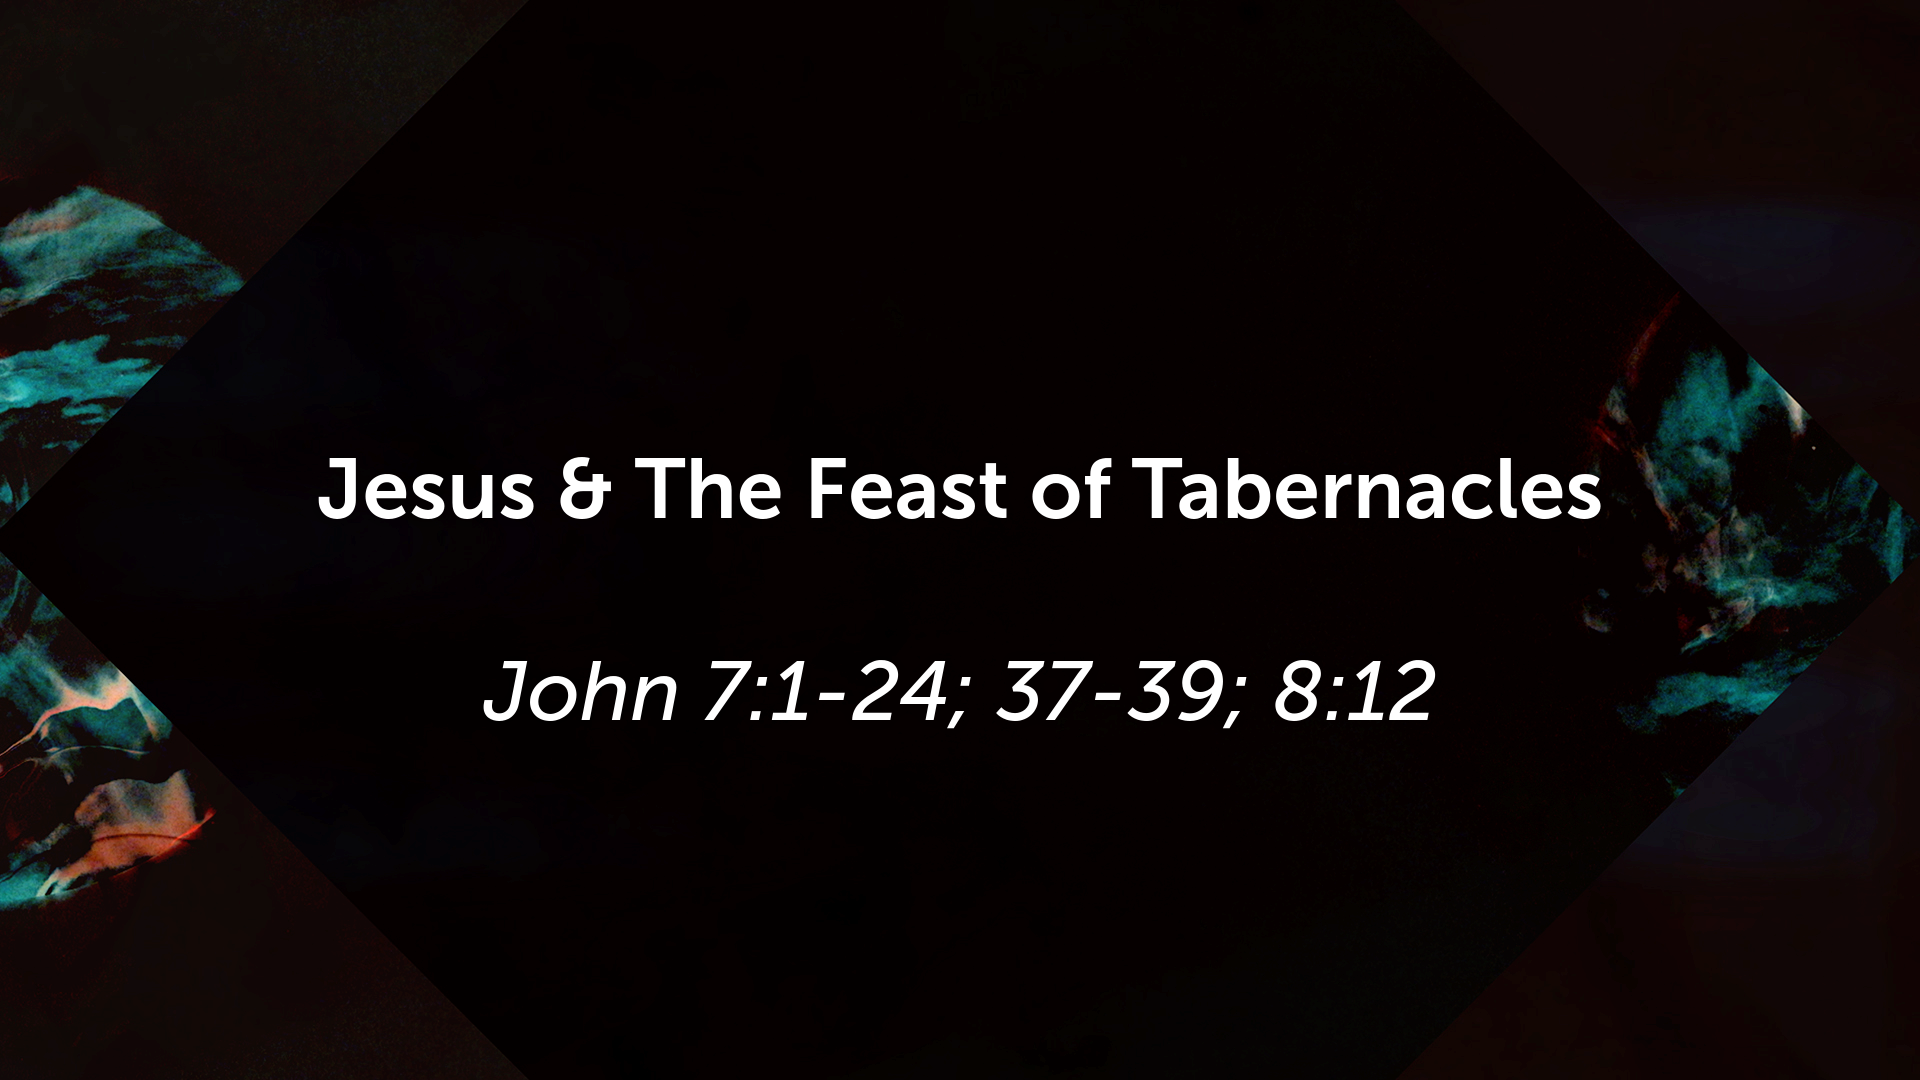 Apr 19, 2020 - Jesus & The Feast of Tabernacles (Video)